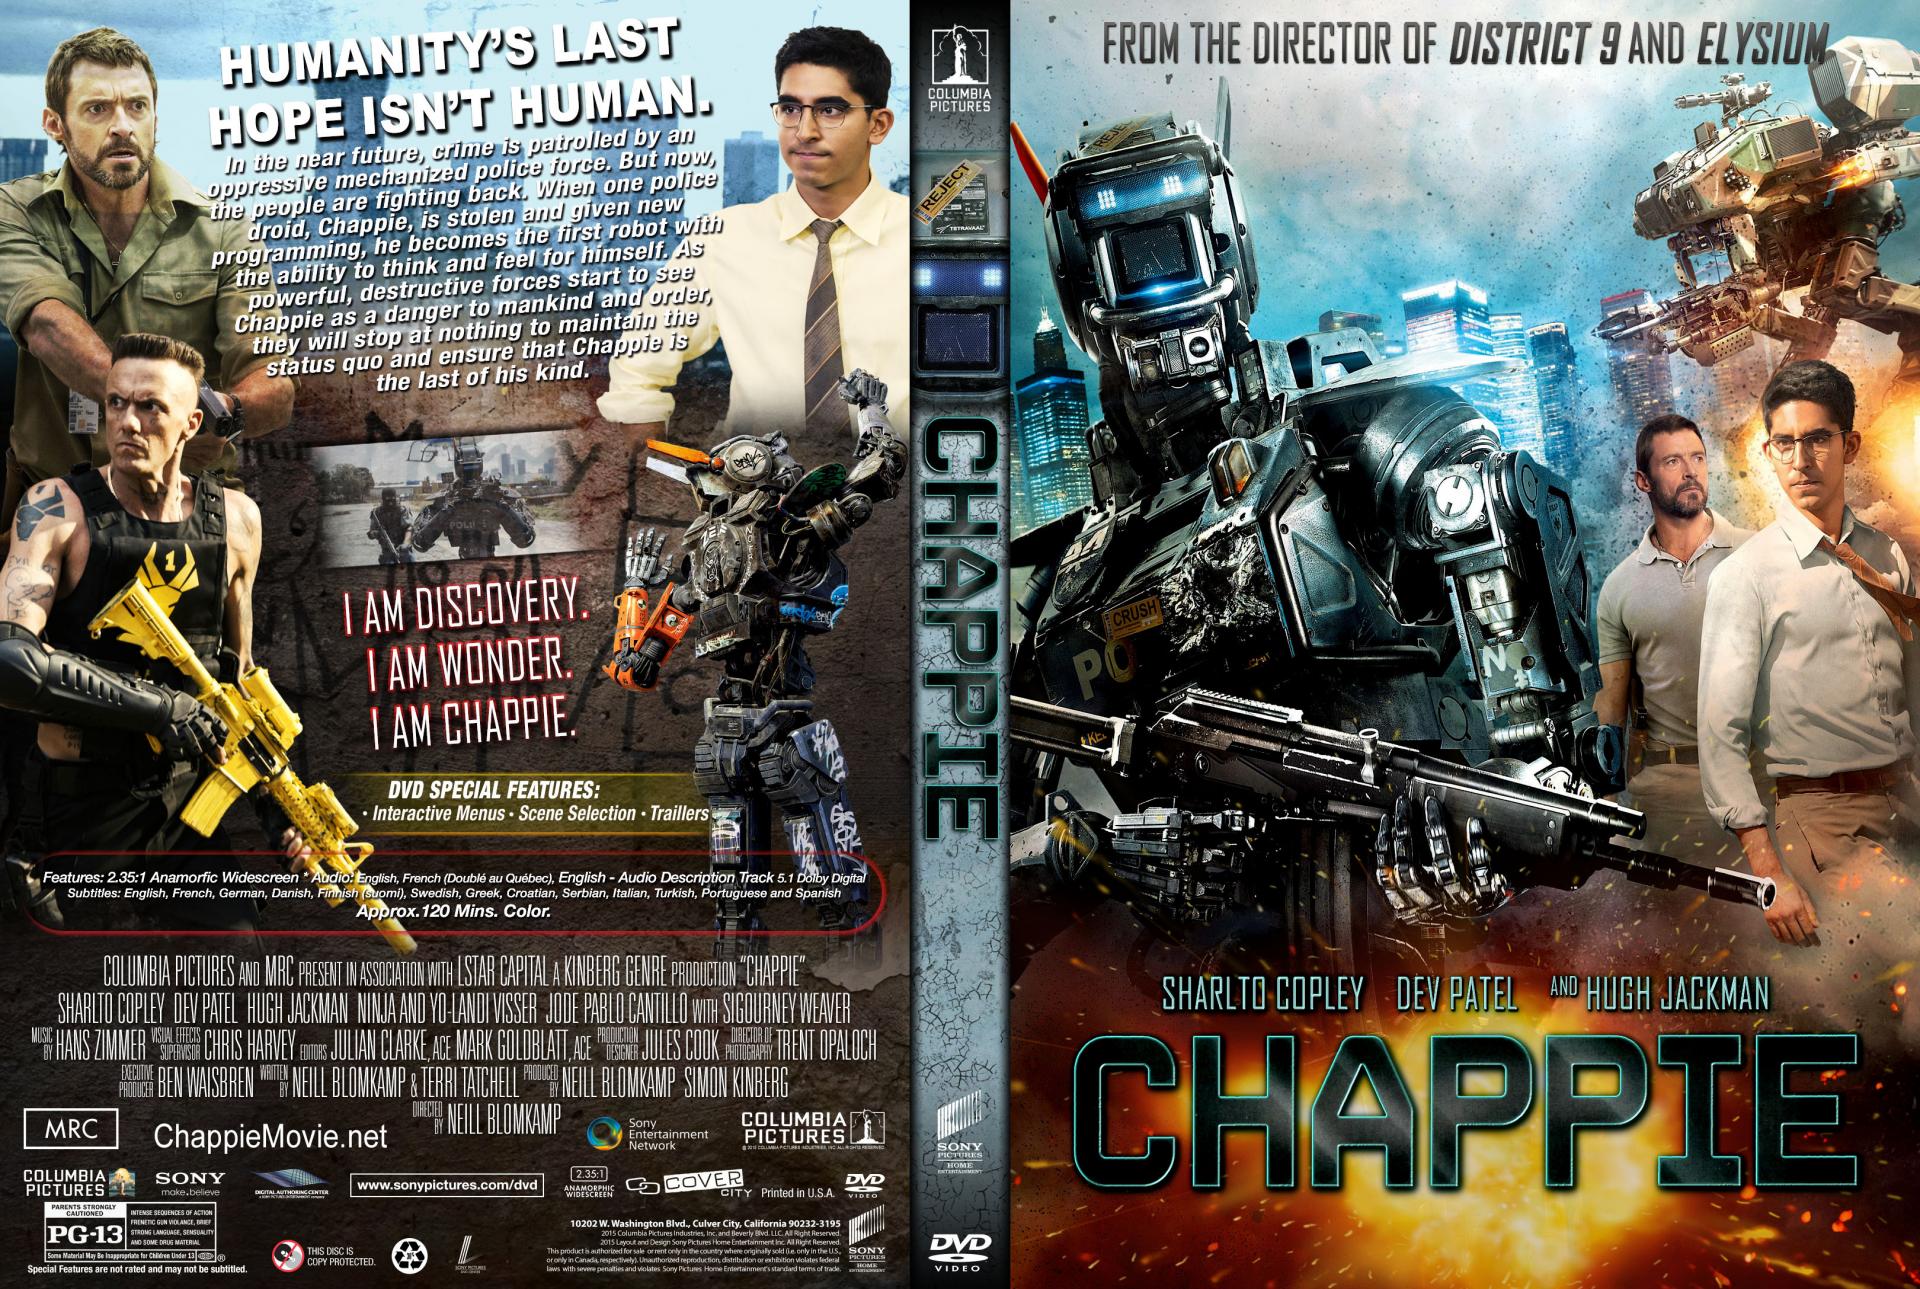 Stiahni si Filmy DVD Chappie (2015)(CZ/EN) = CSFD 67%